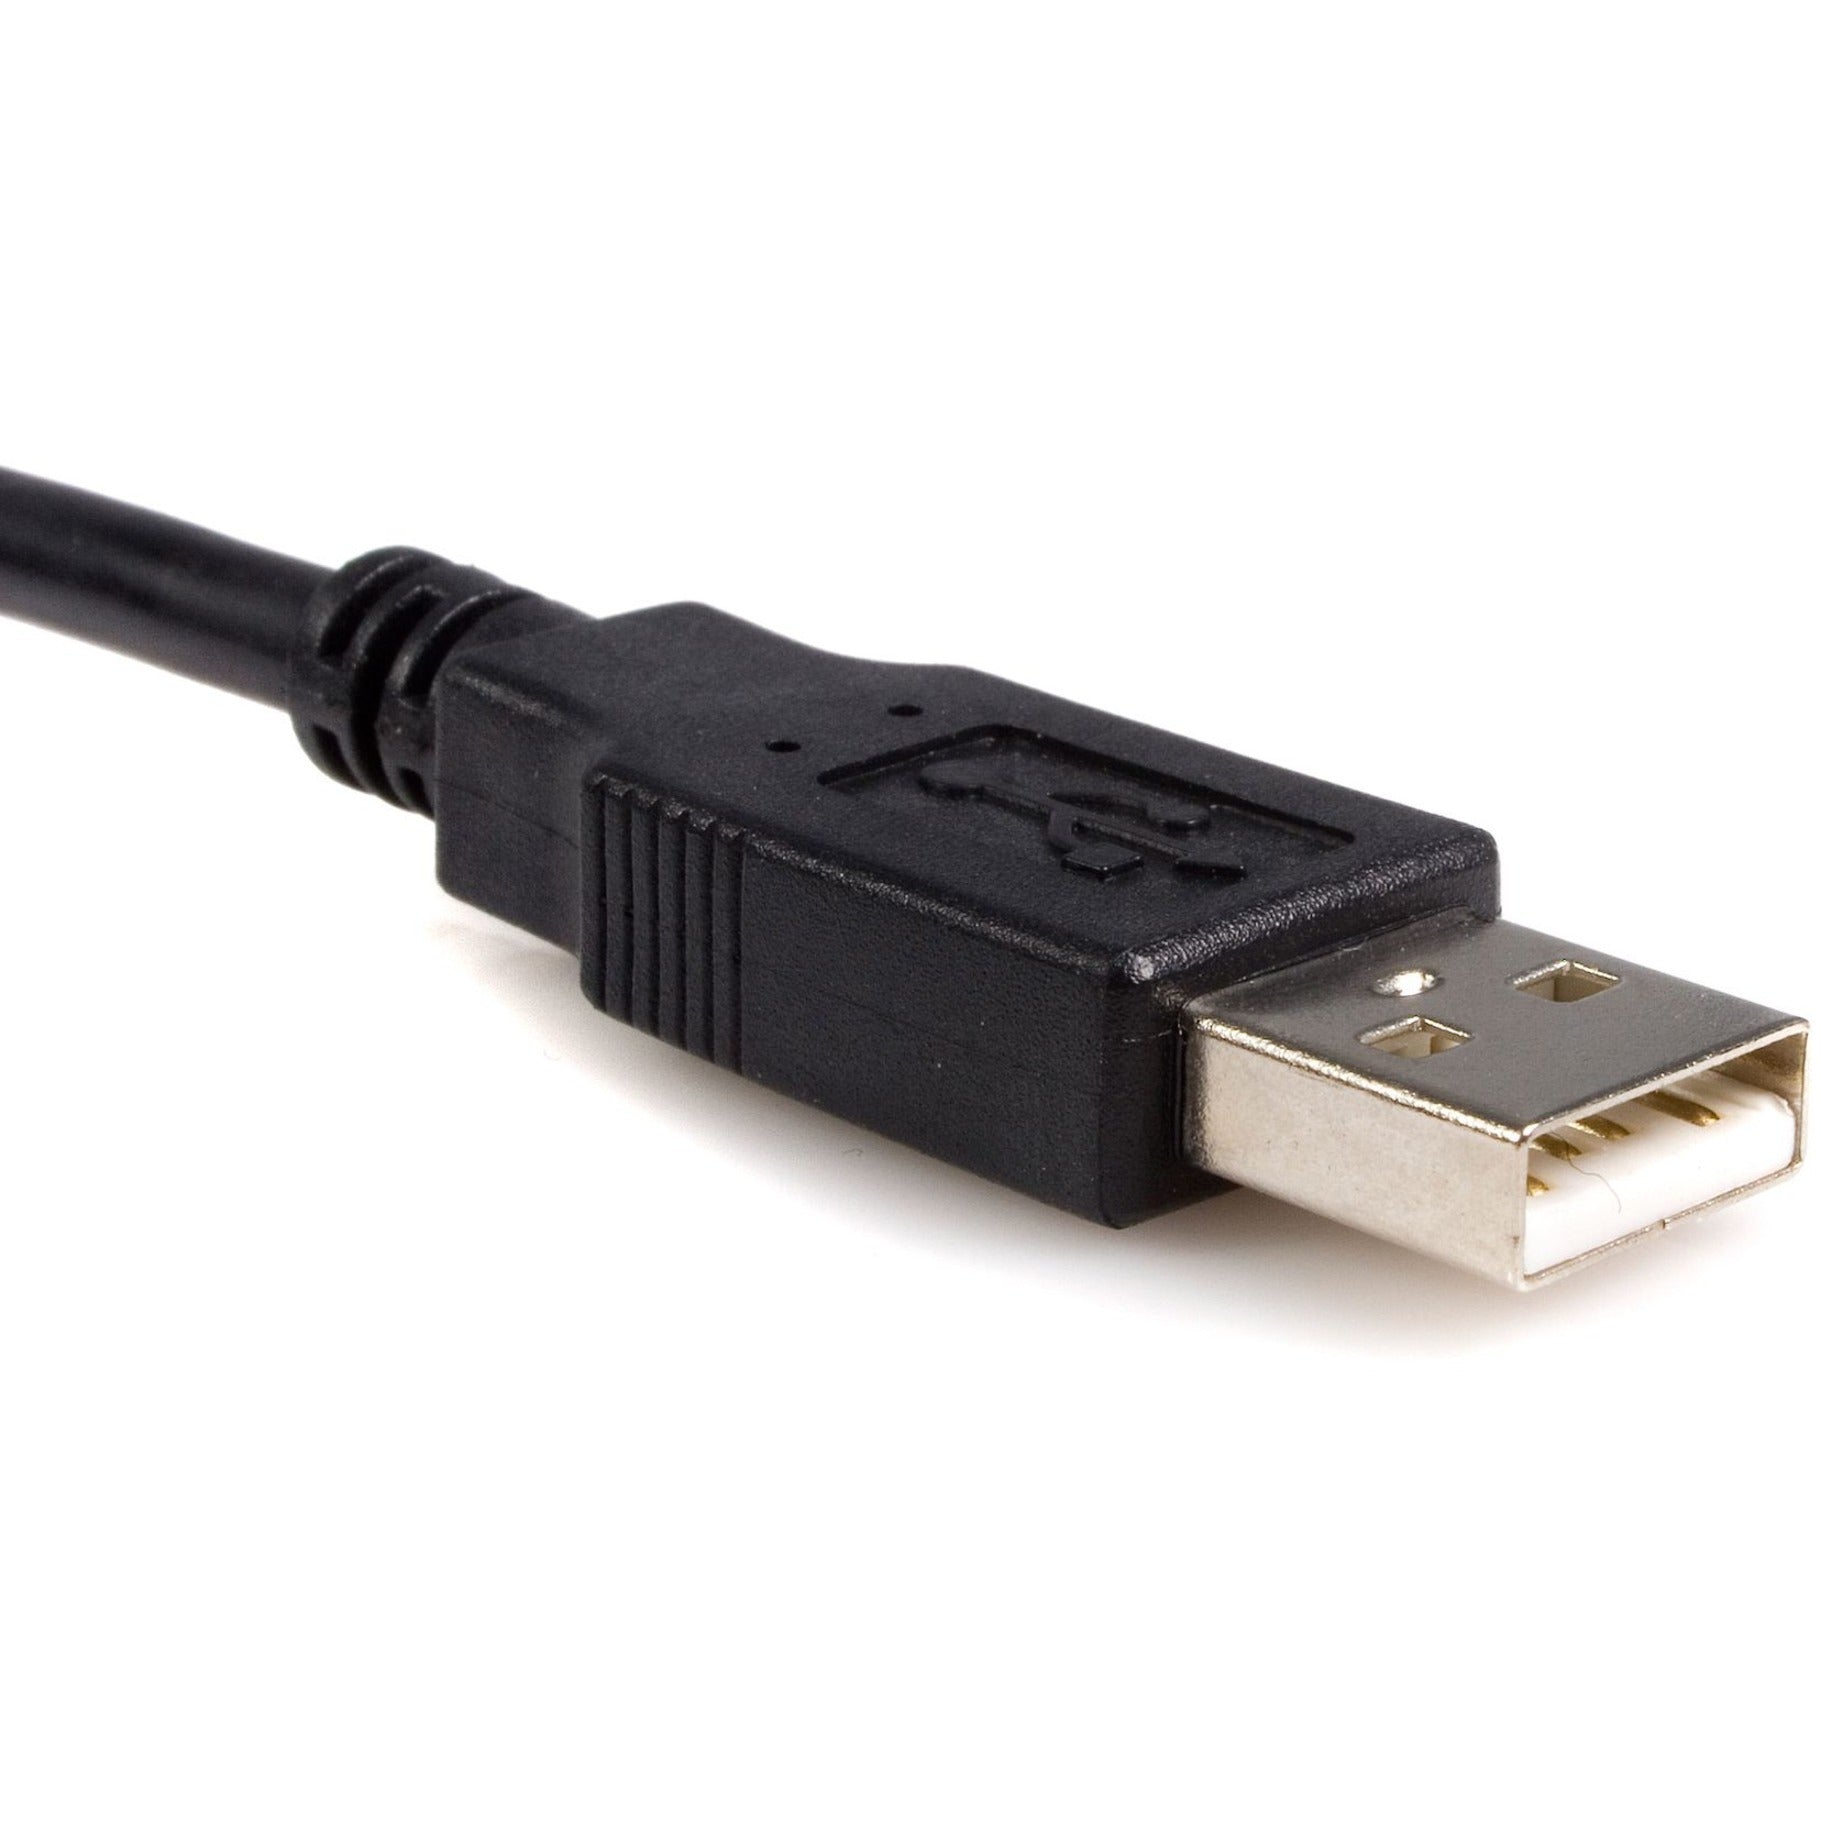 StarTech.com ICUSB1284 Parallel Printer Adapter - USB - 6 ft, Plug & Play